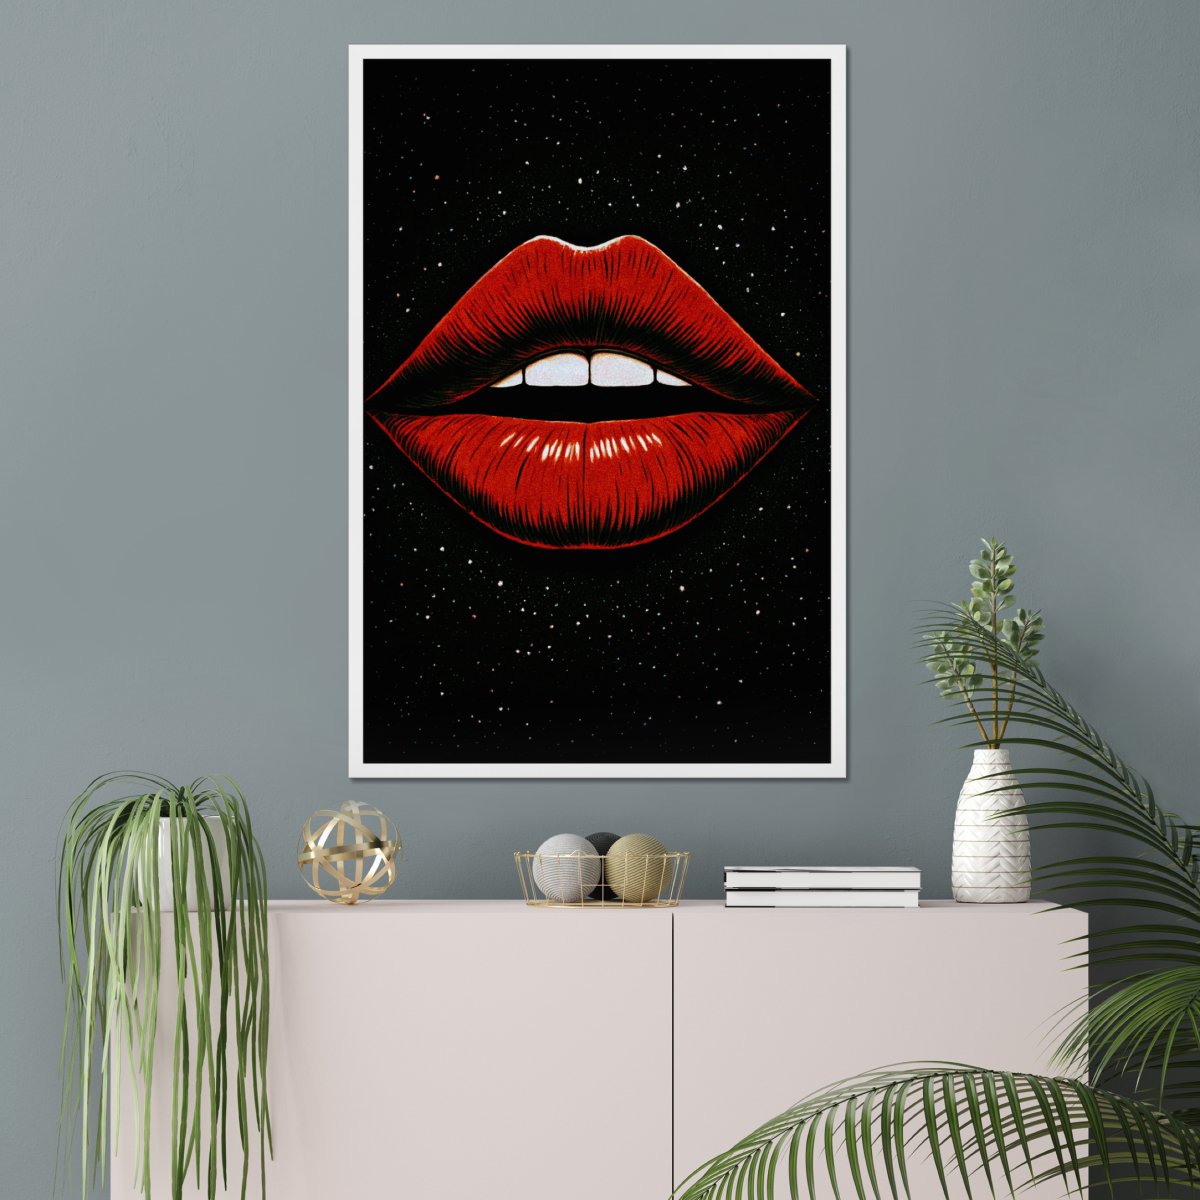 Full kiss - Art print - Poster - Ever colorful